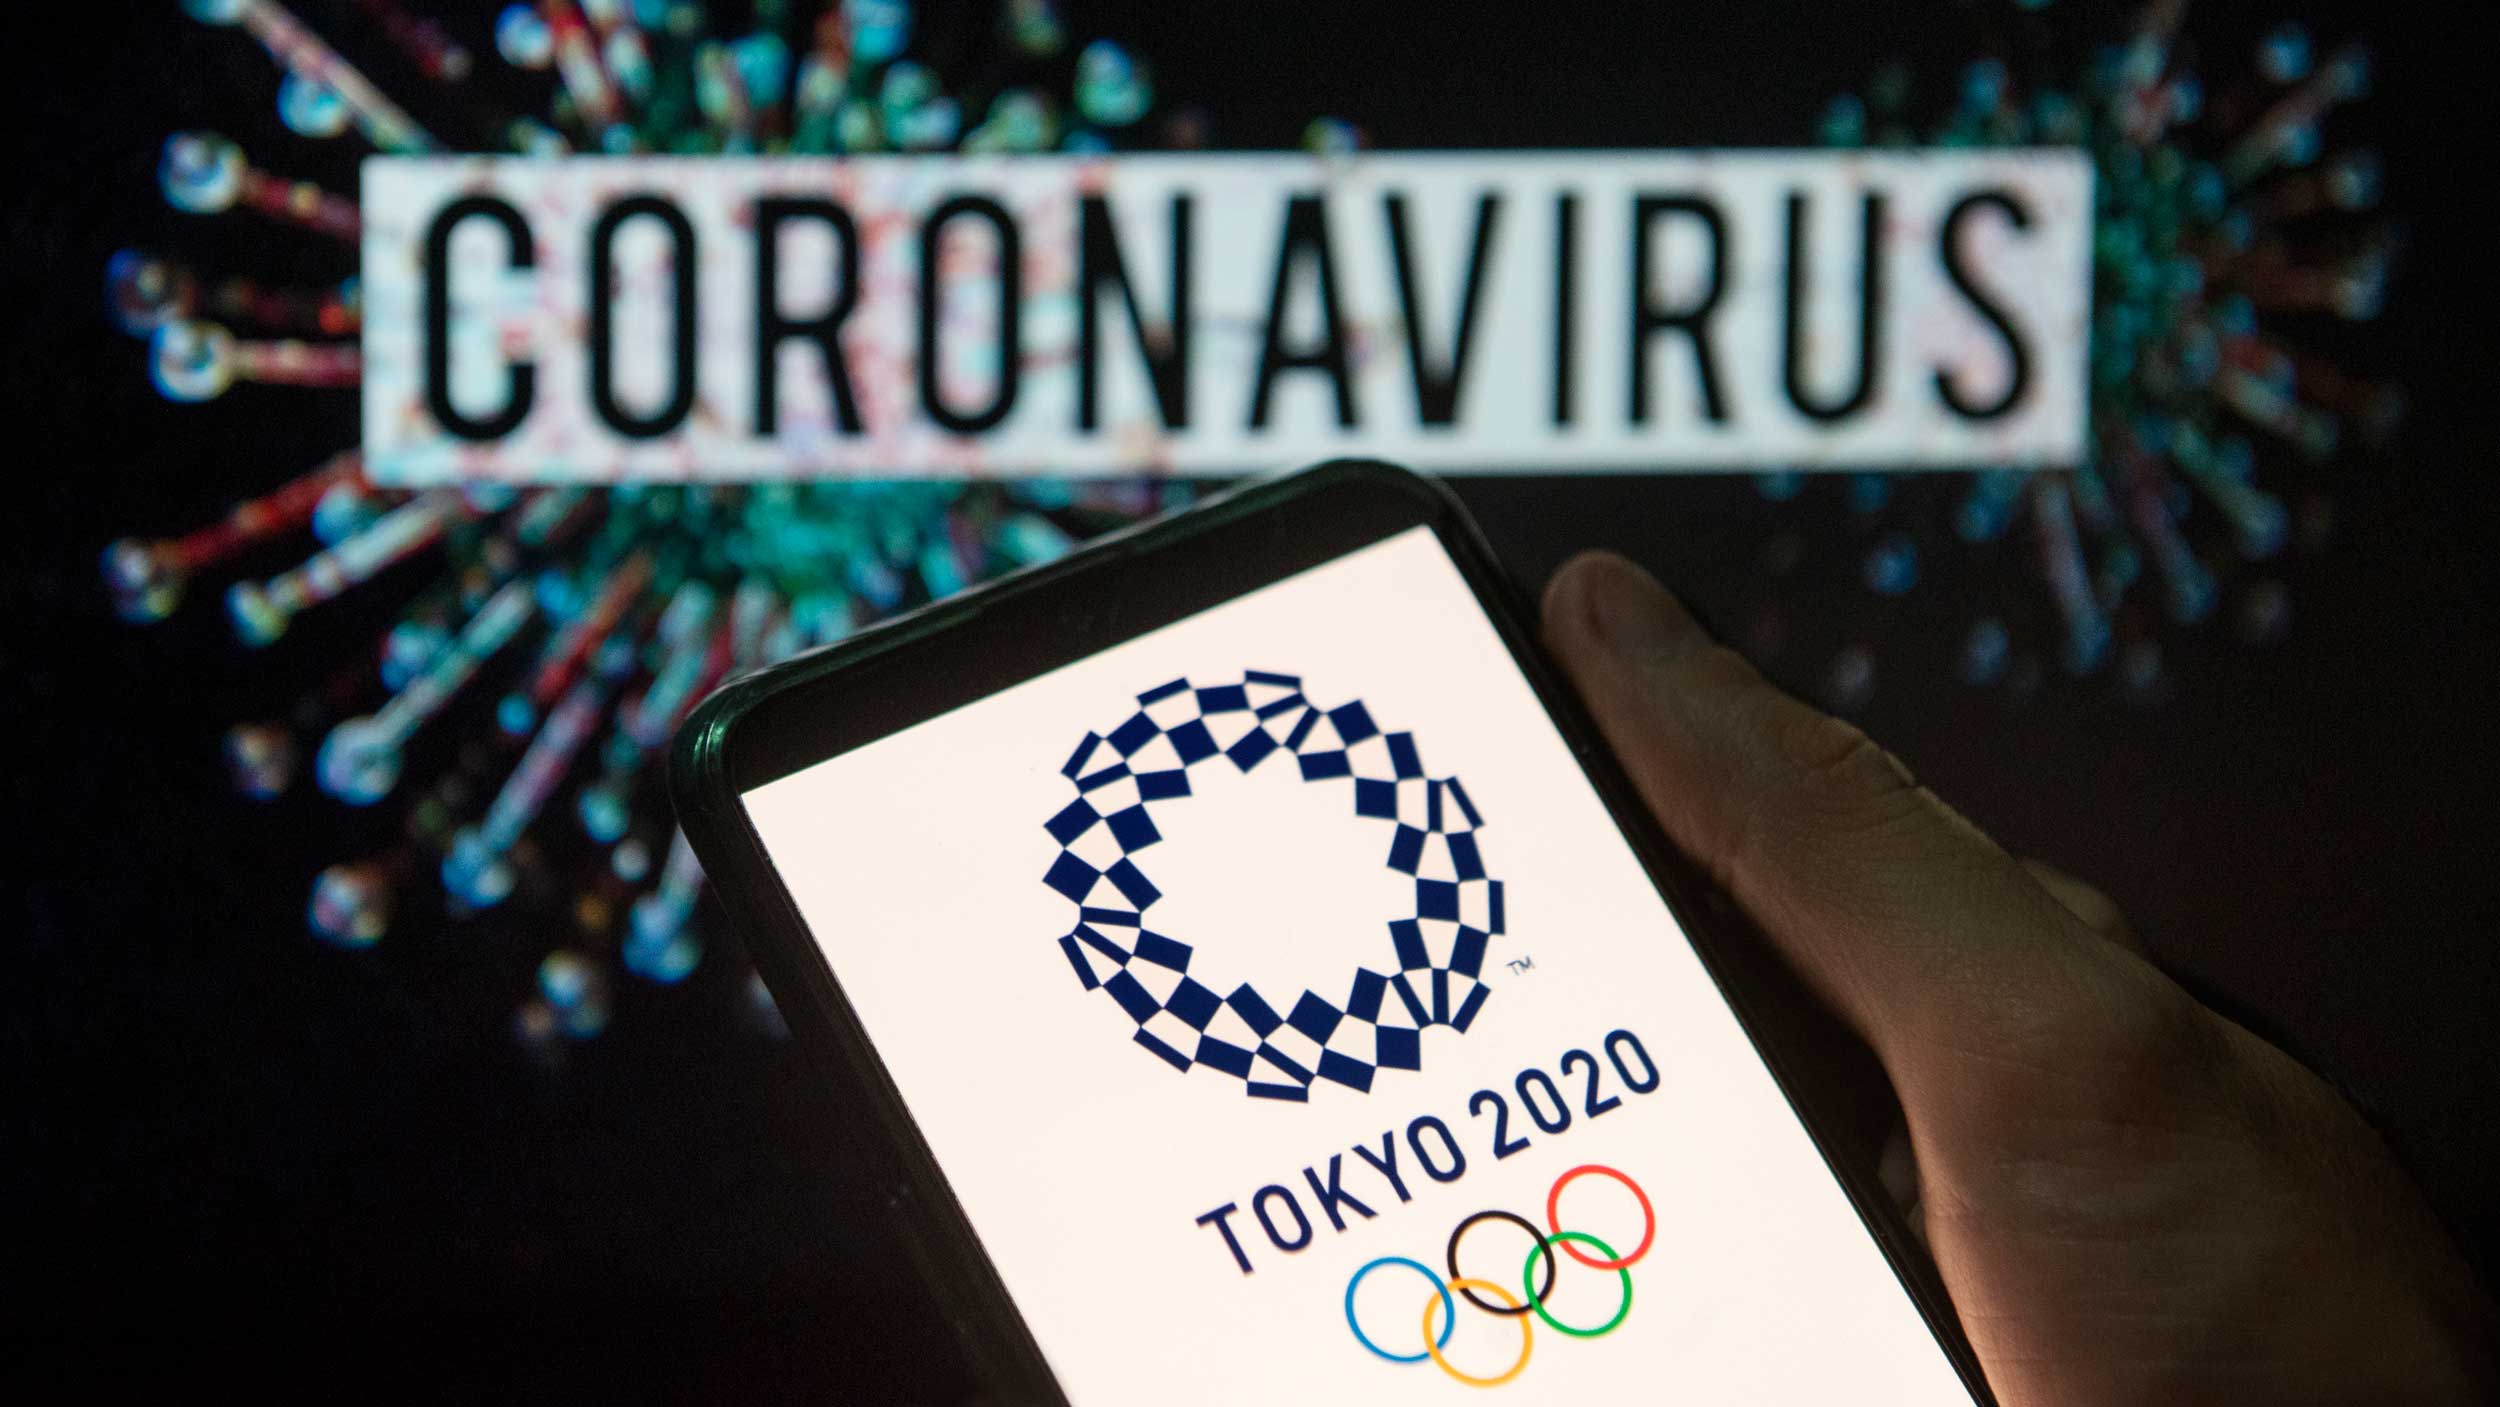 2020 logo with new corona virus image